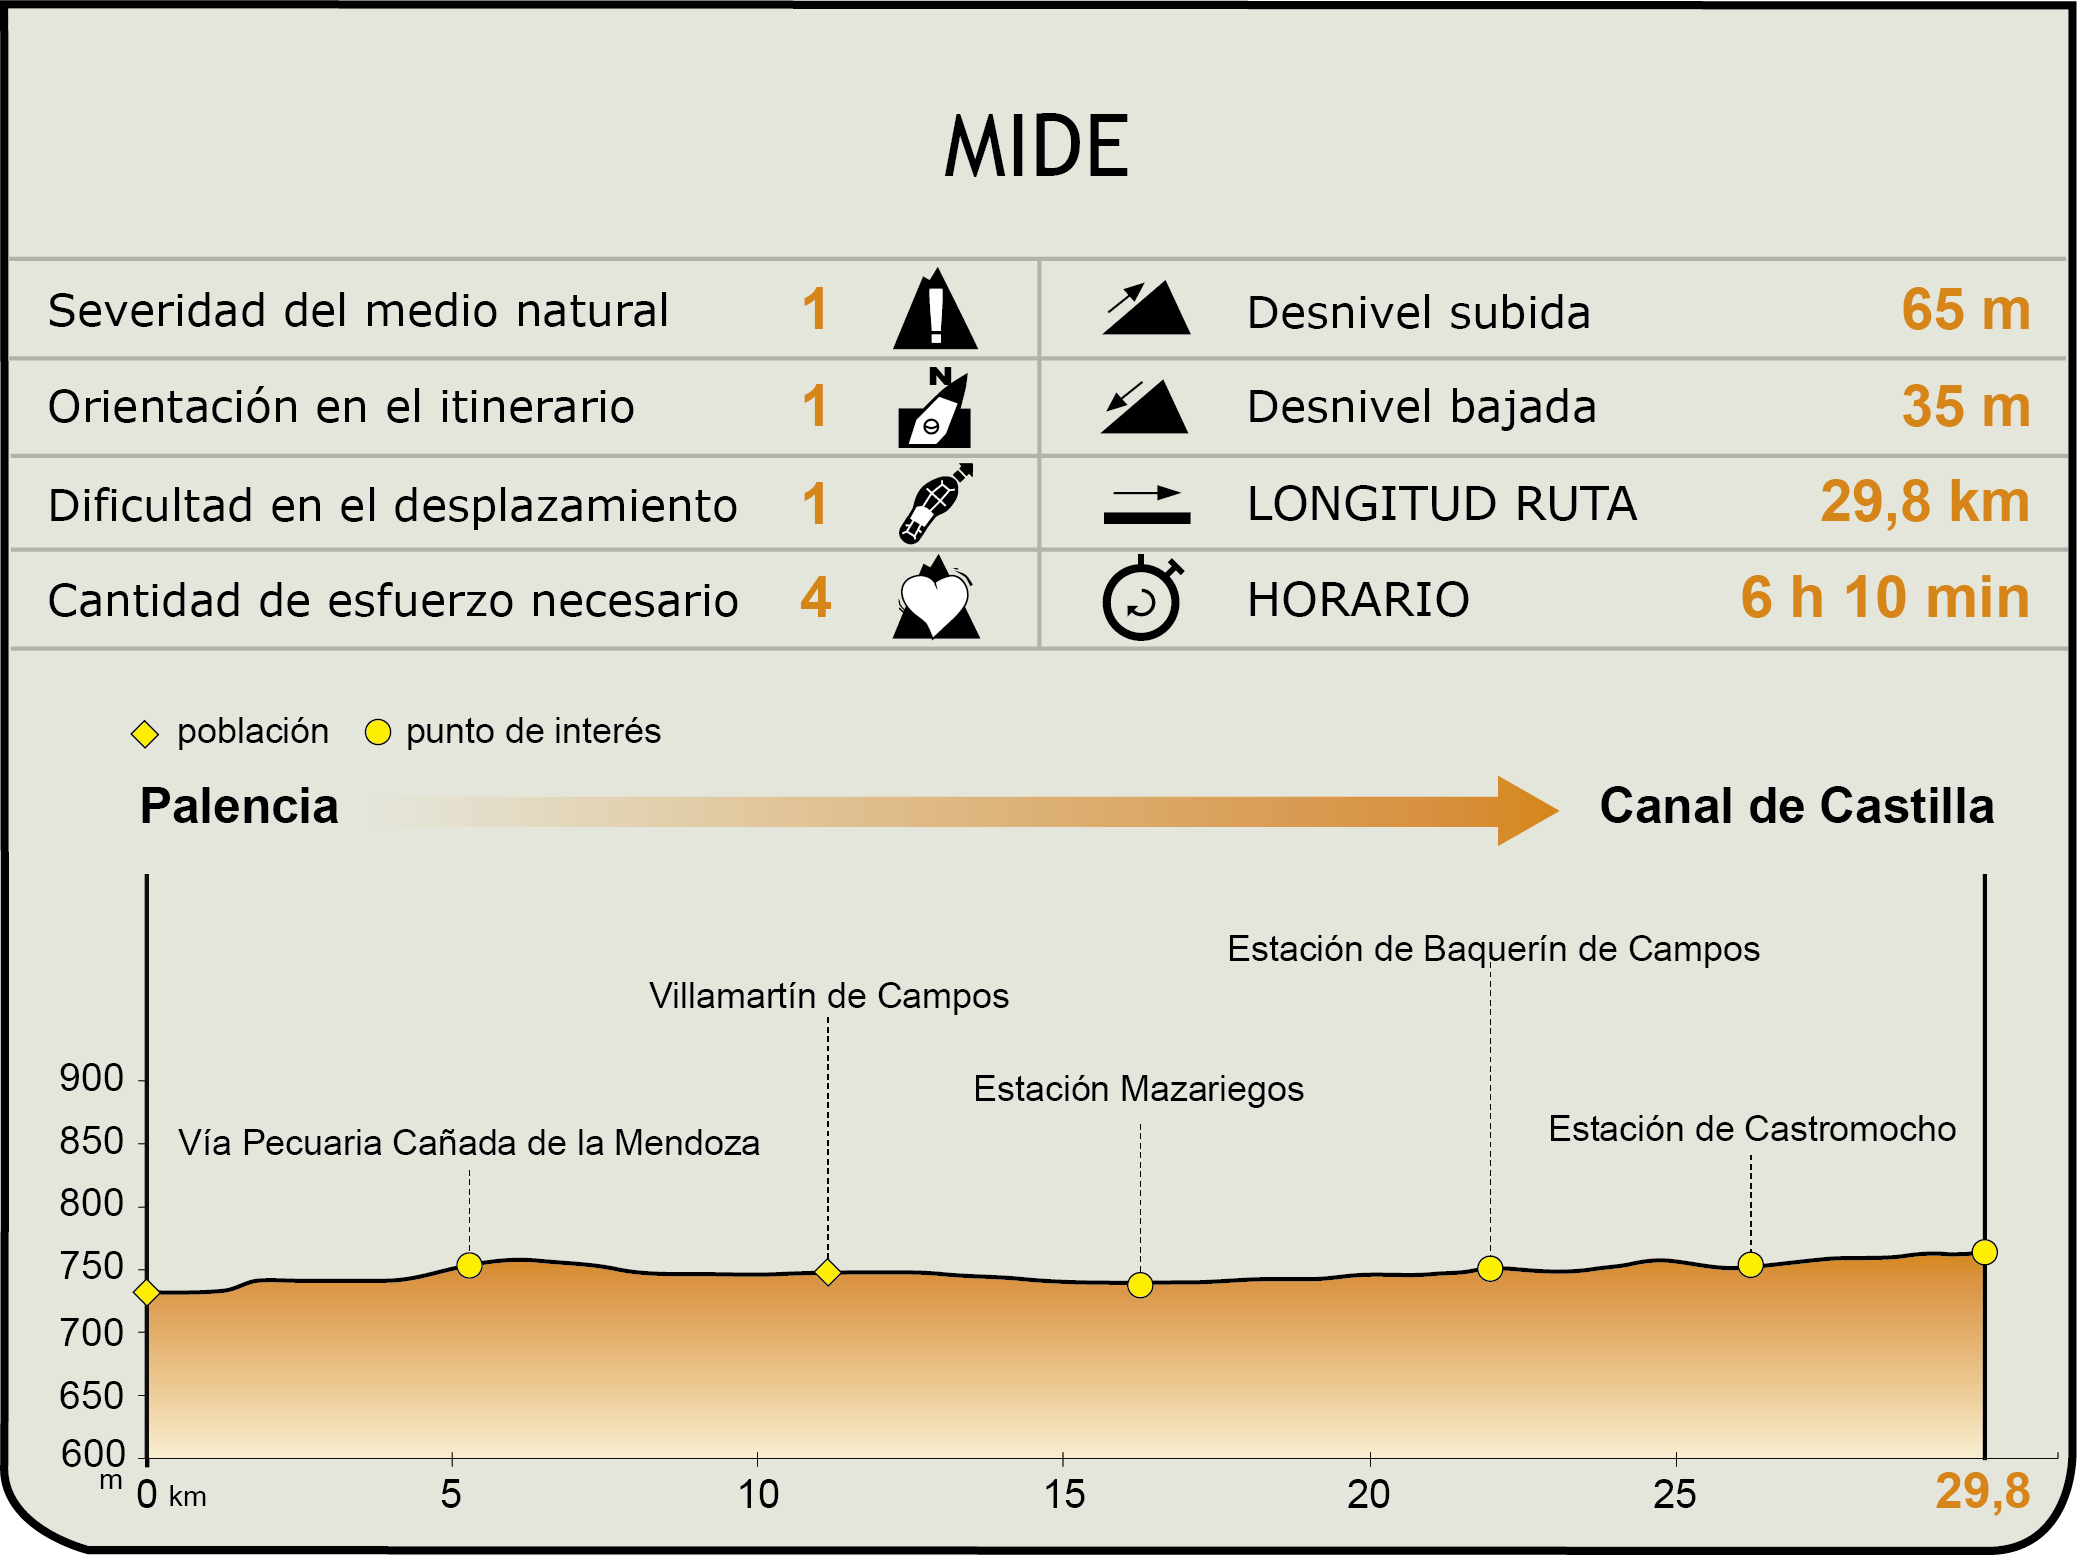 MIDE. Camino Natural del Tren Secundario de Castilla